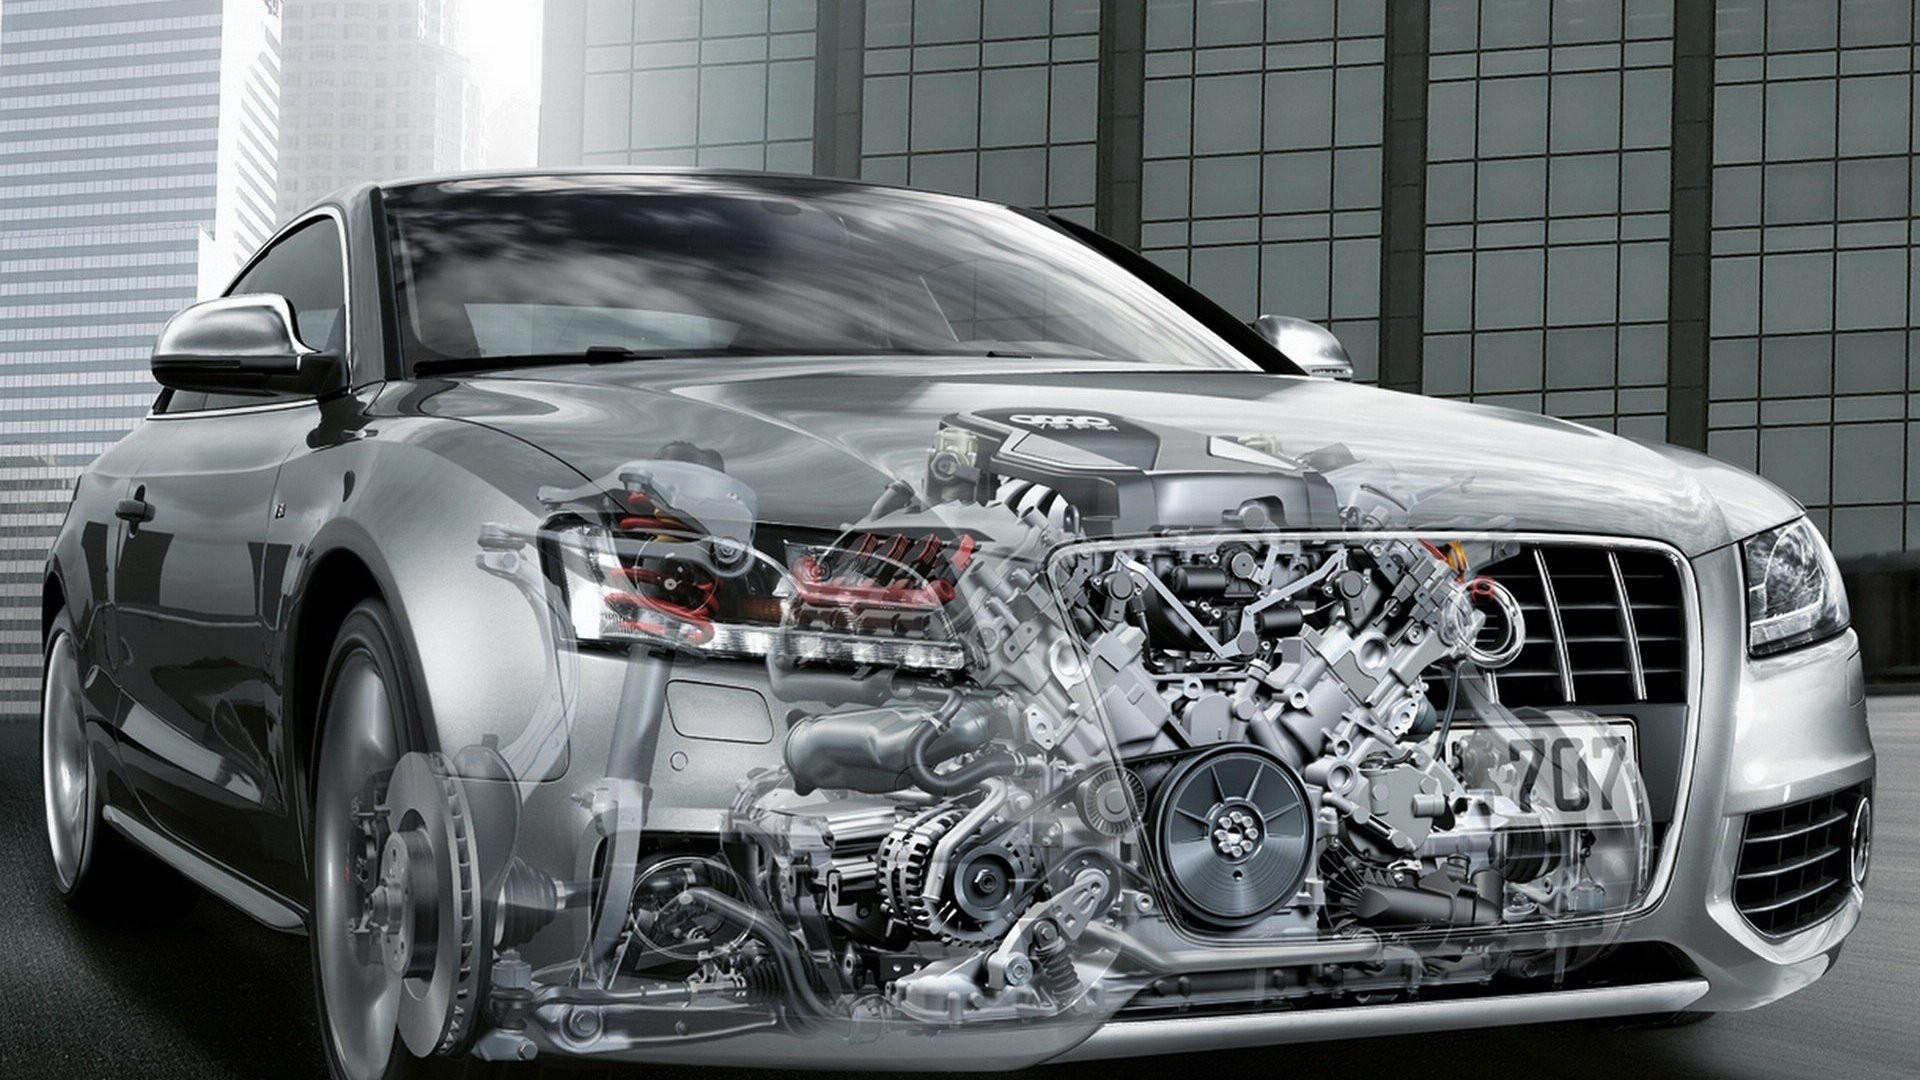 engines, Audi, transparent, motor, X-Ray, Audi A5 - desktop wallpaper